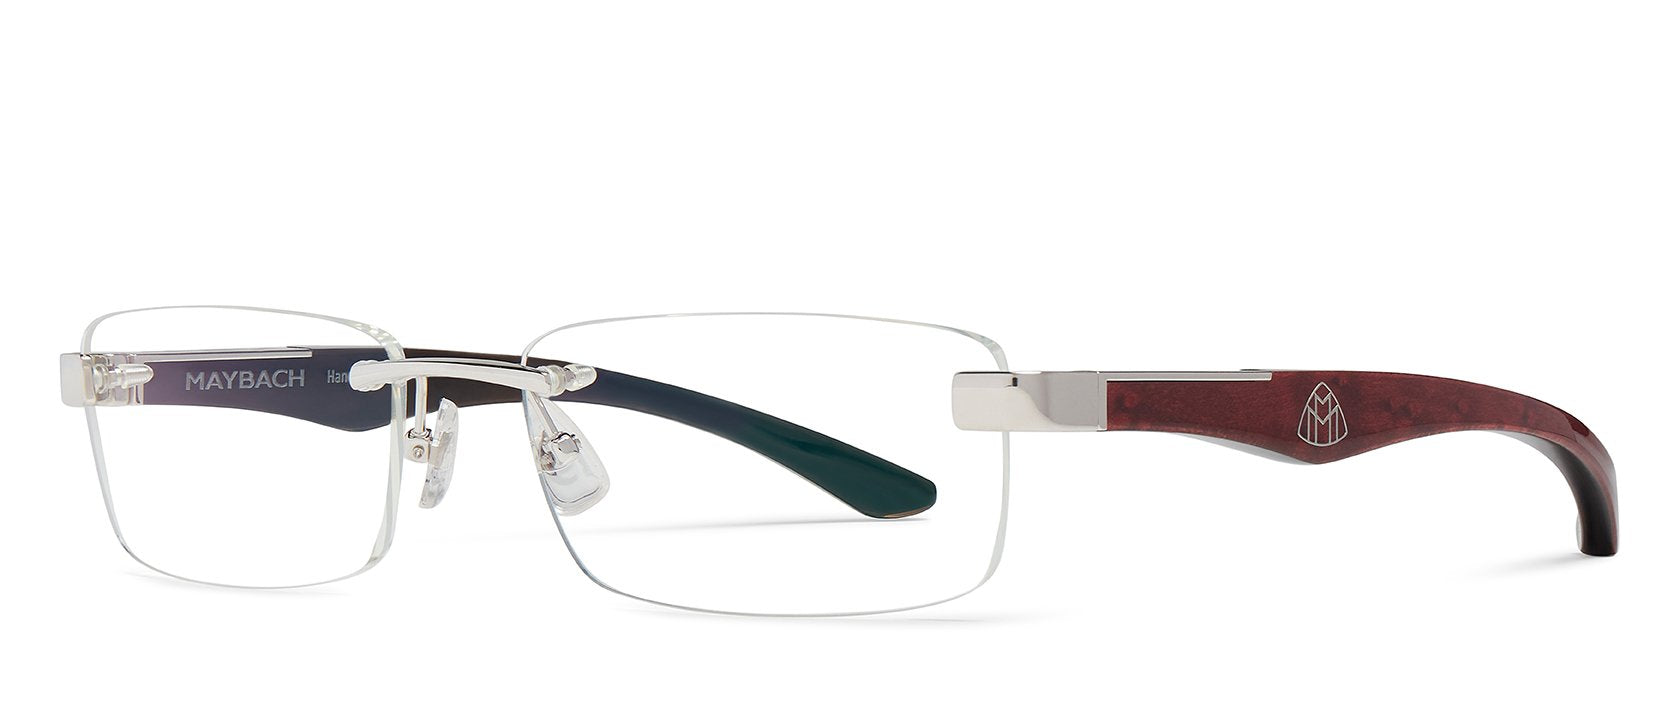 MAYBACH EYEWEAR - Luxury Sunglasses & Optical Frames